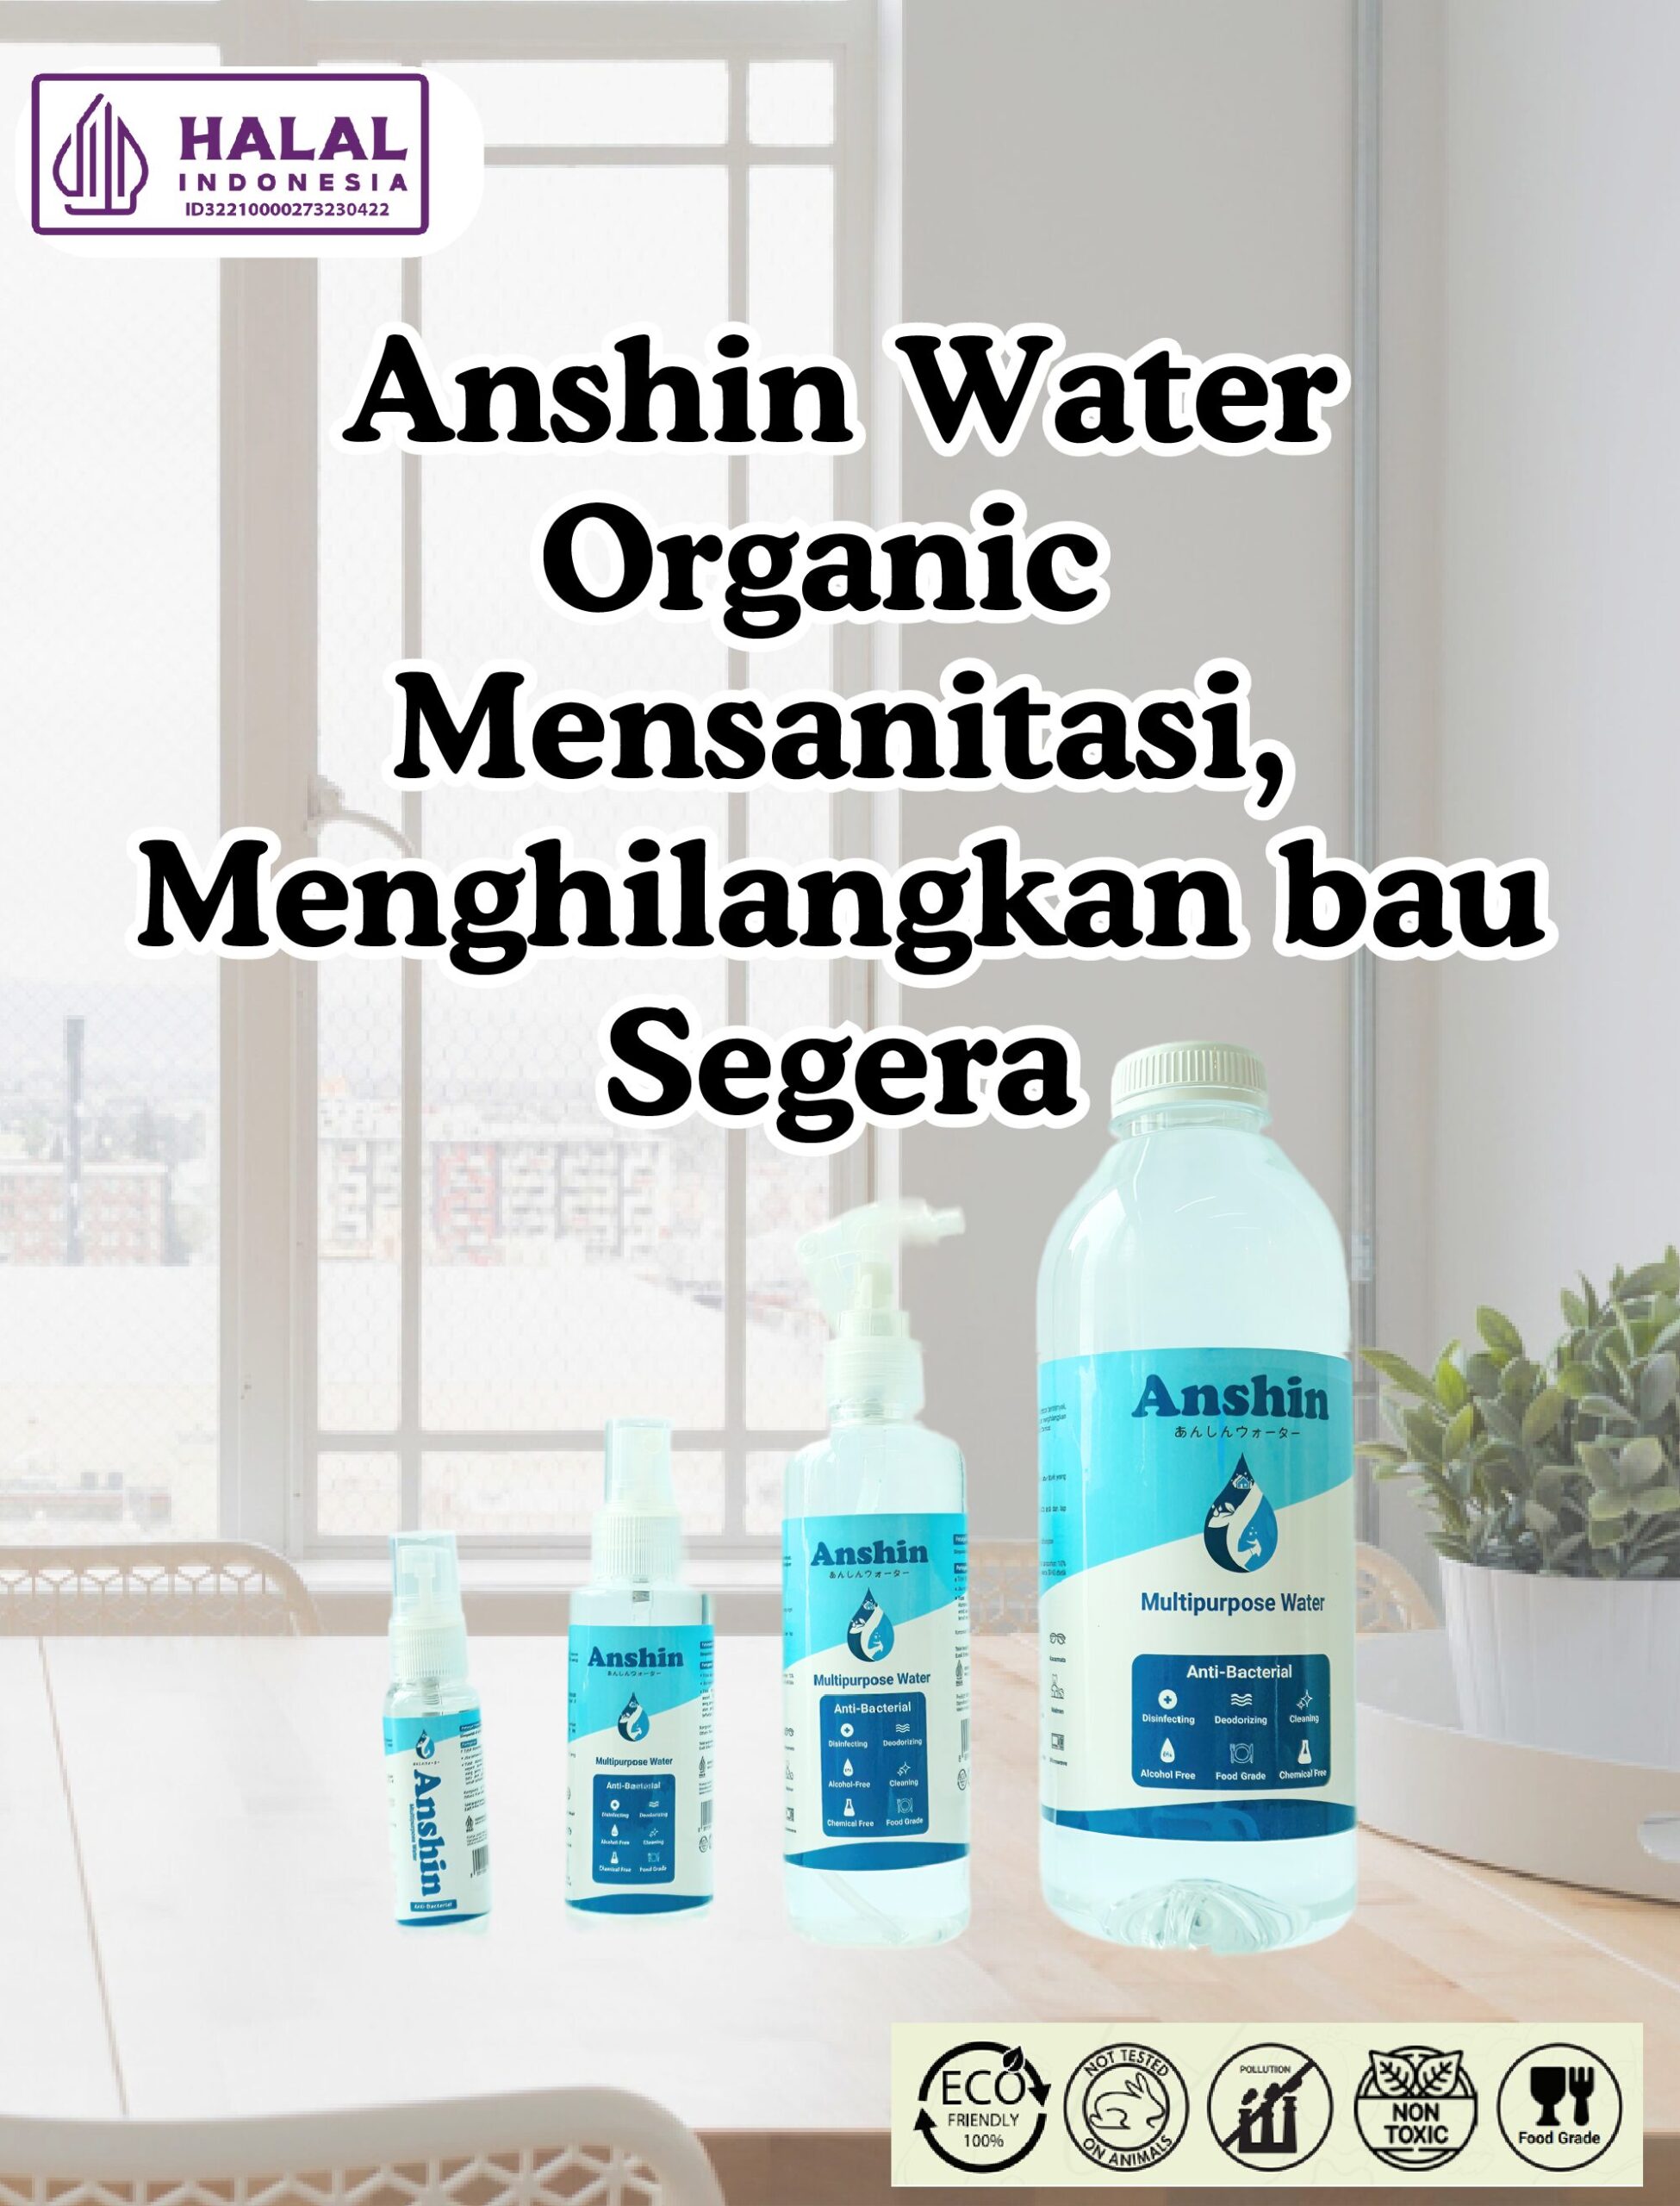 Anshin Water apa itu? organic sanitizer, deodorant spray, cleaner